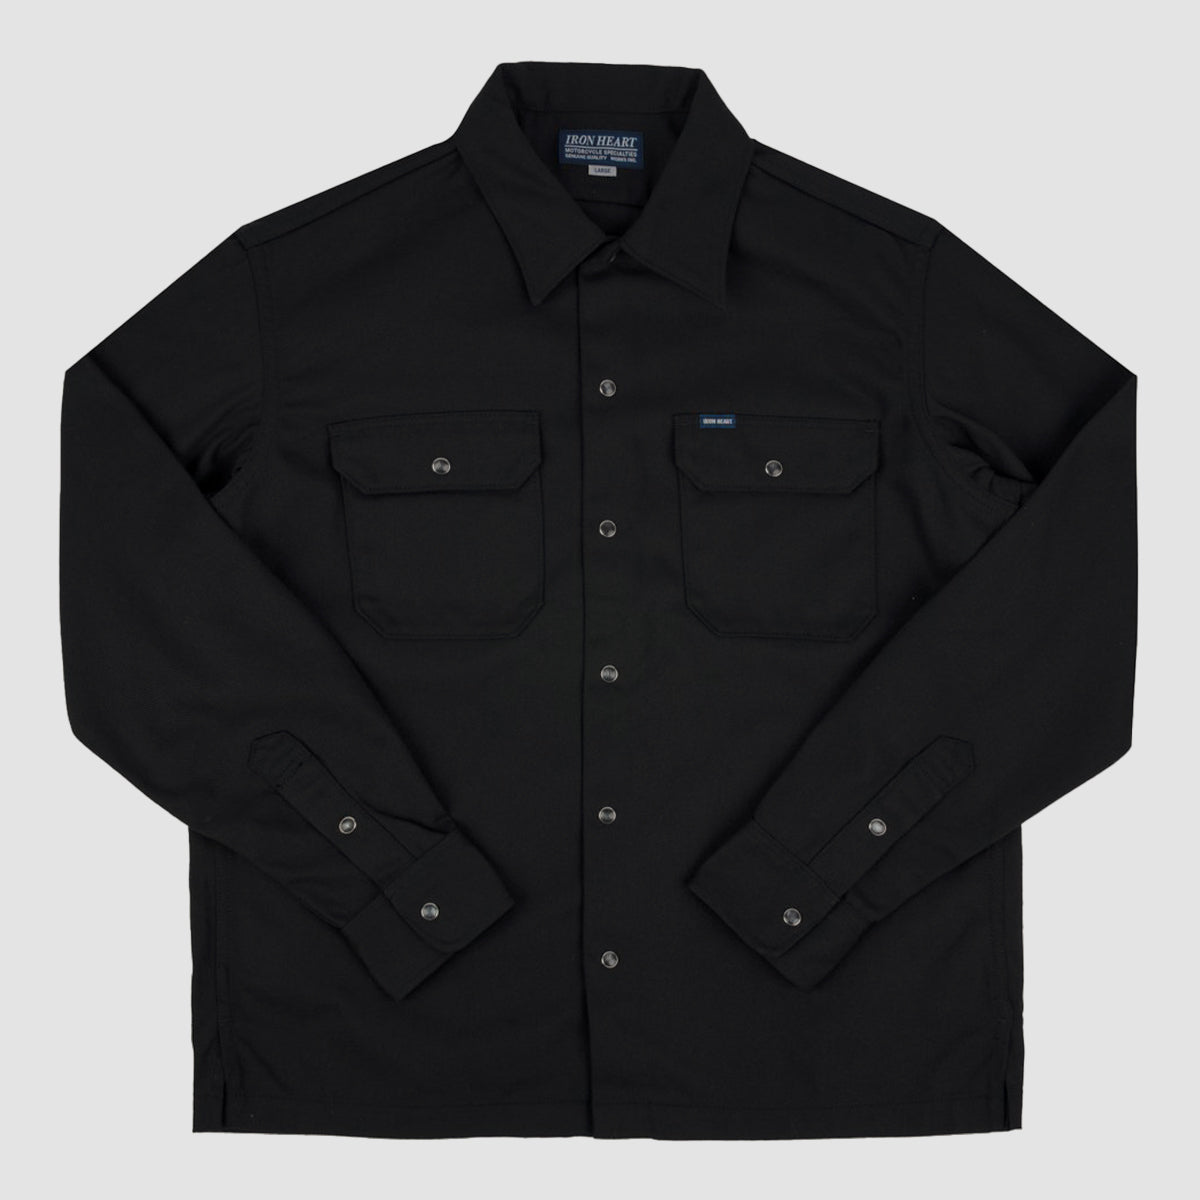 11oz T/C Mechanic Shirt - Black